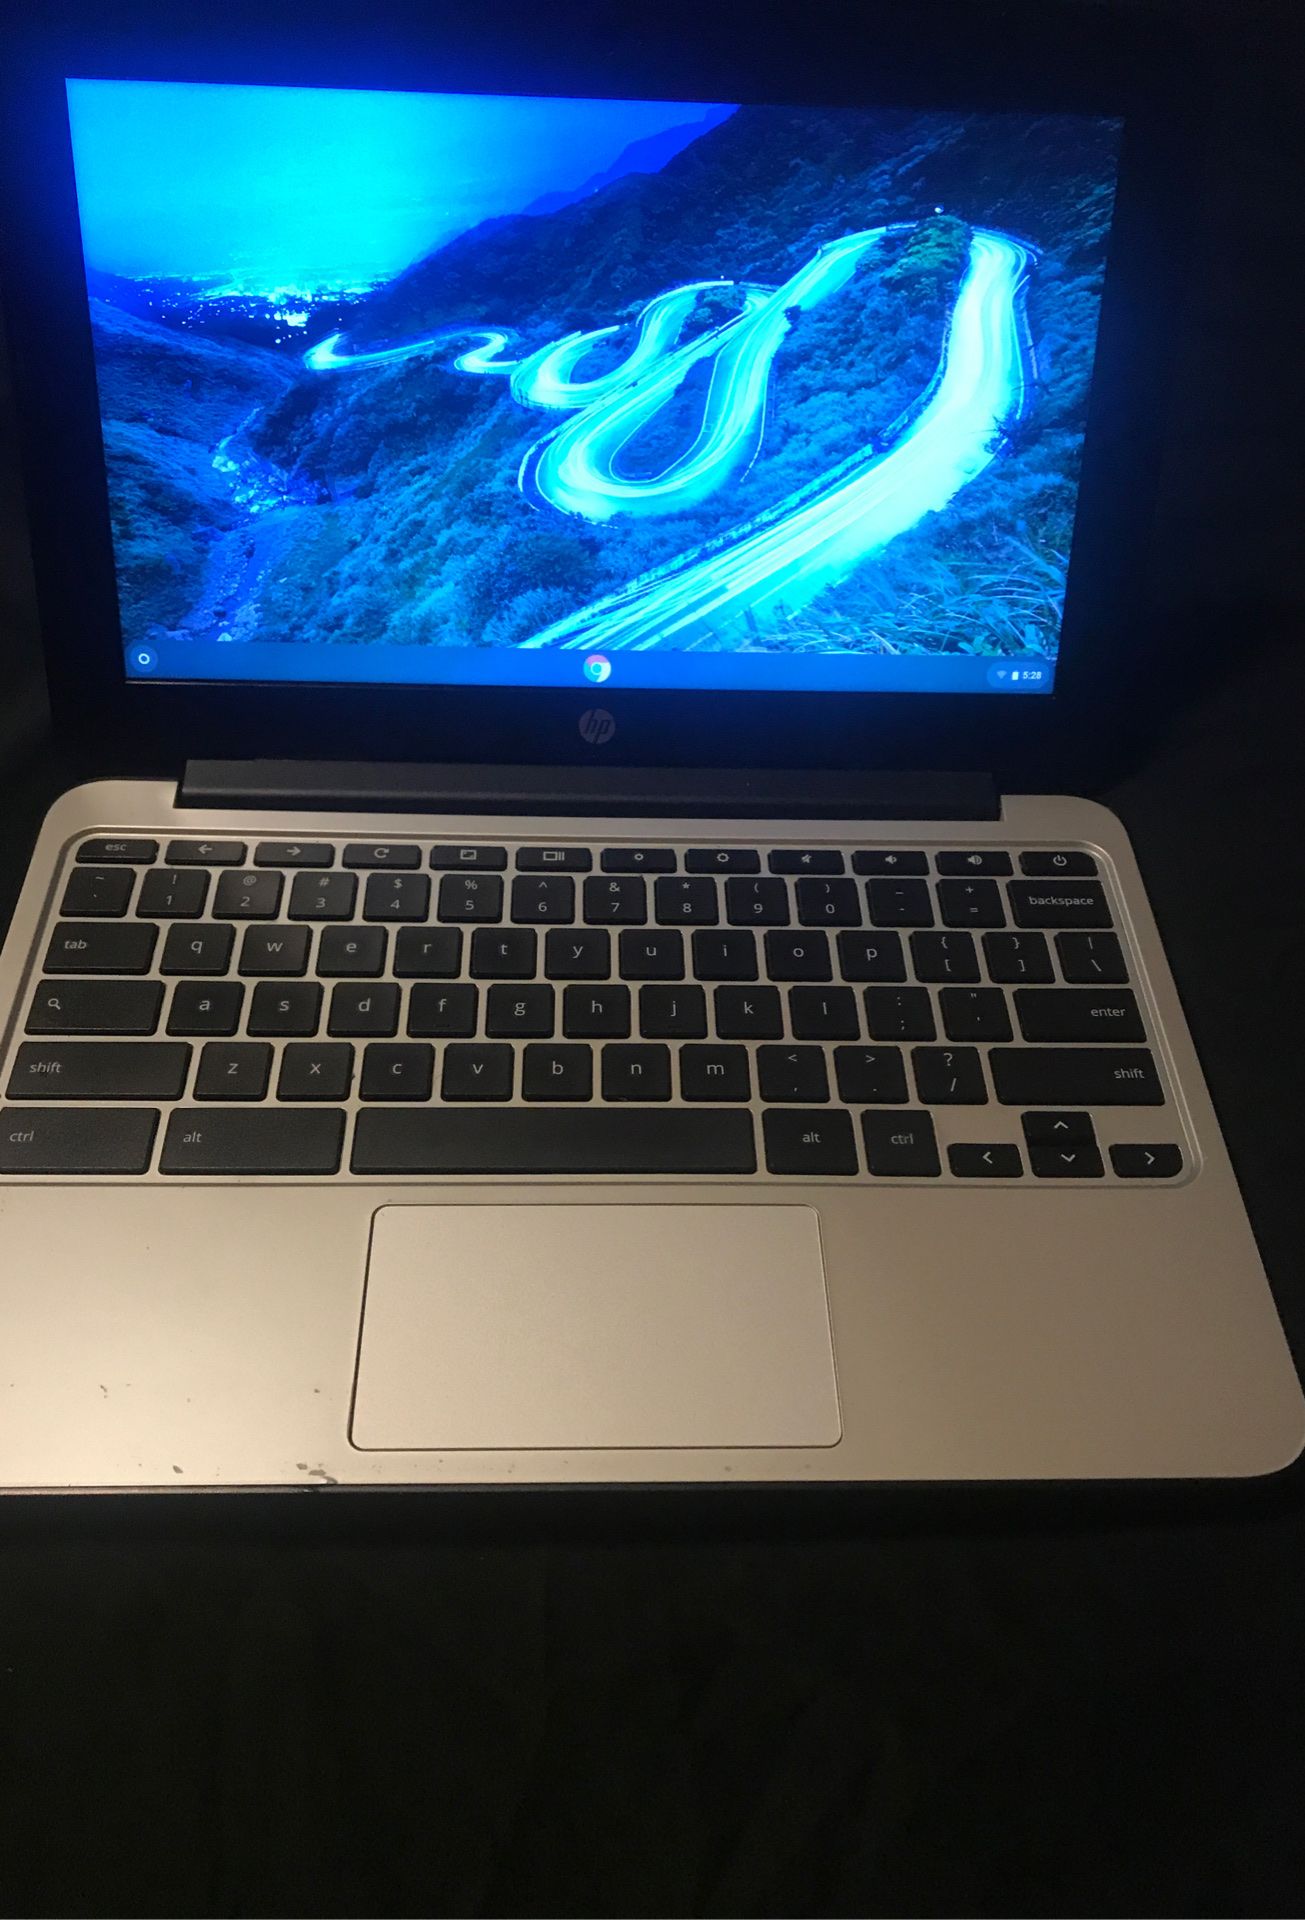 HP Brand Laptop